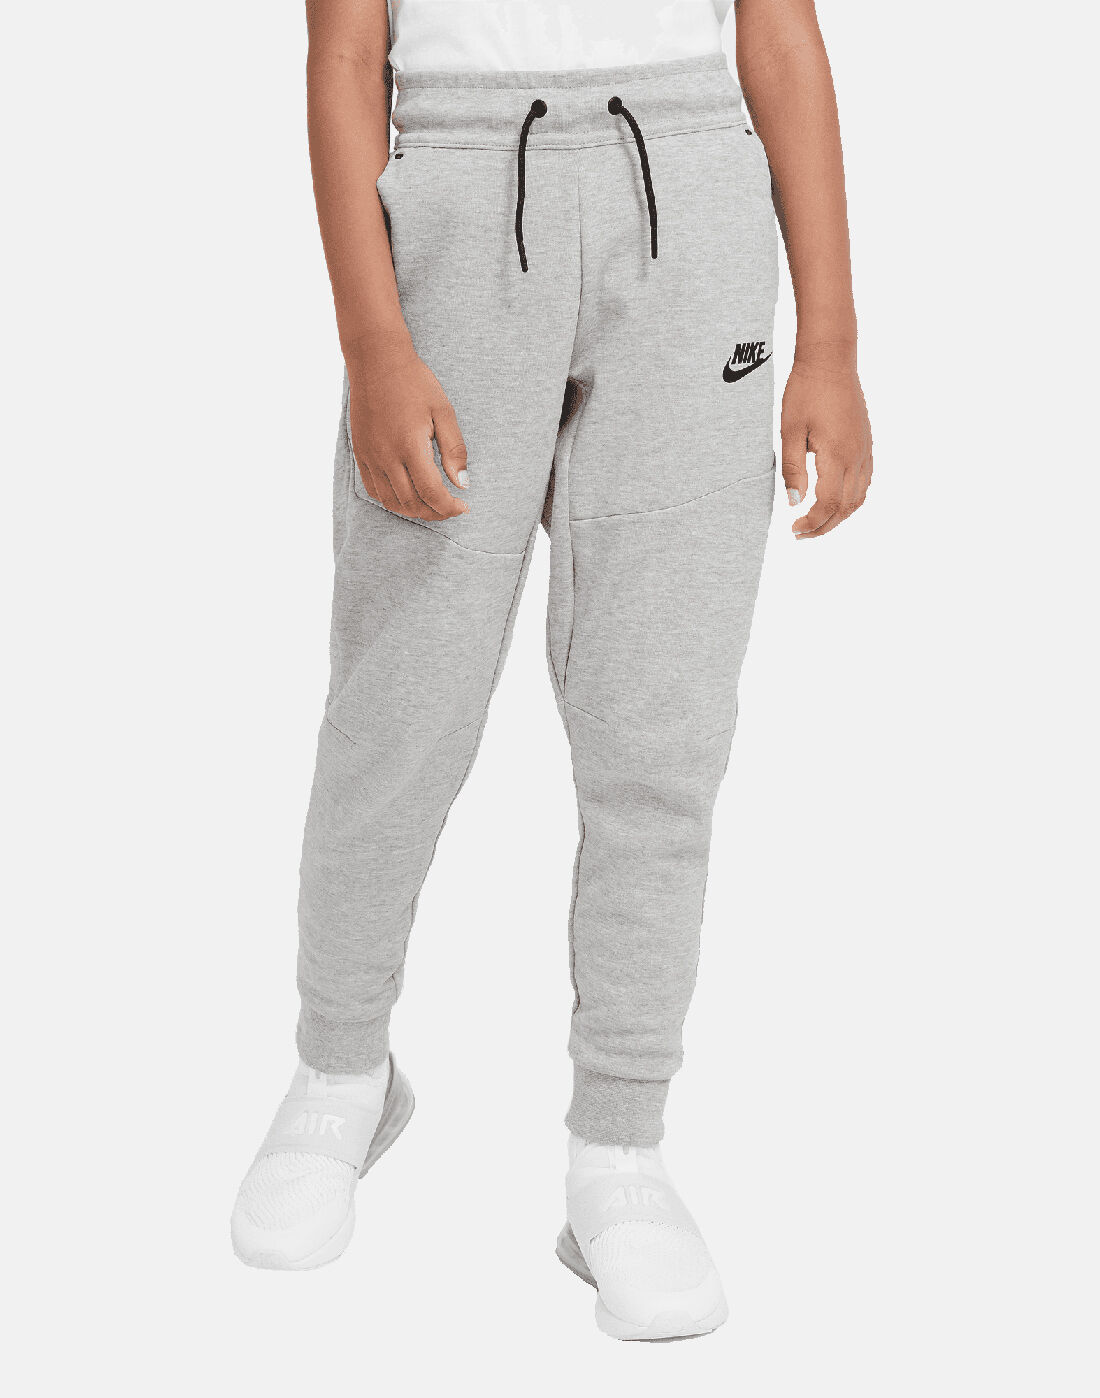 Nike Older Boys Tech Fleece Pant - Grey 